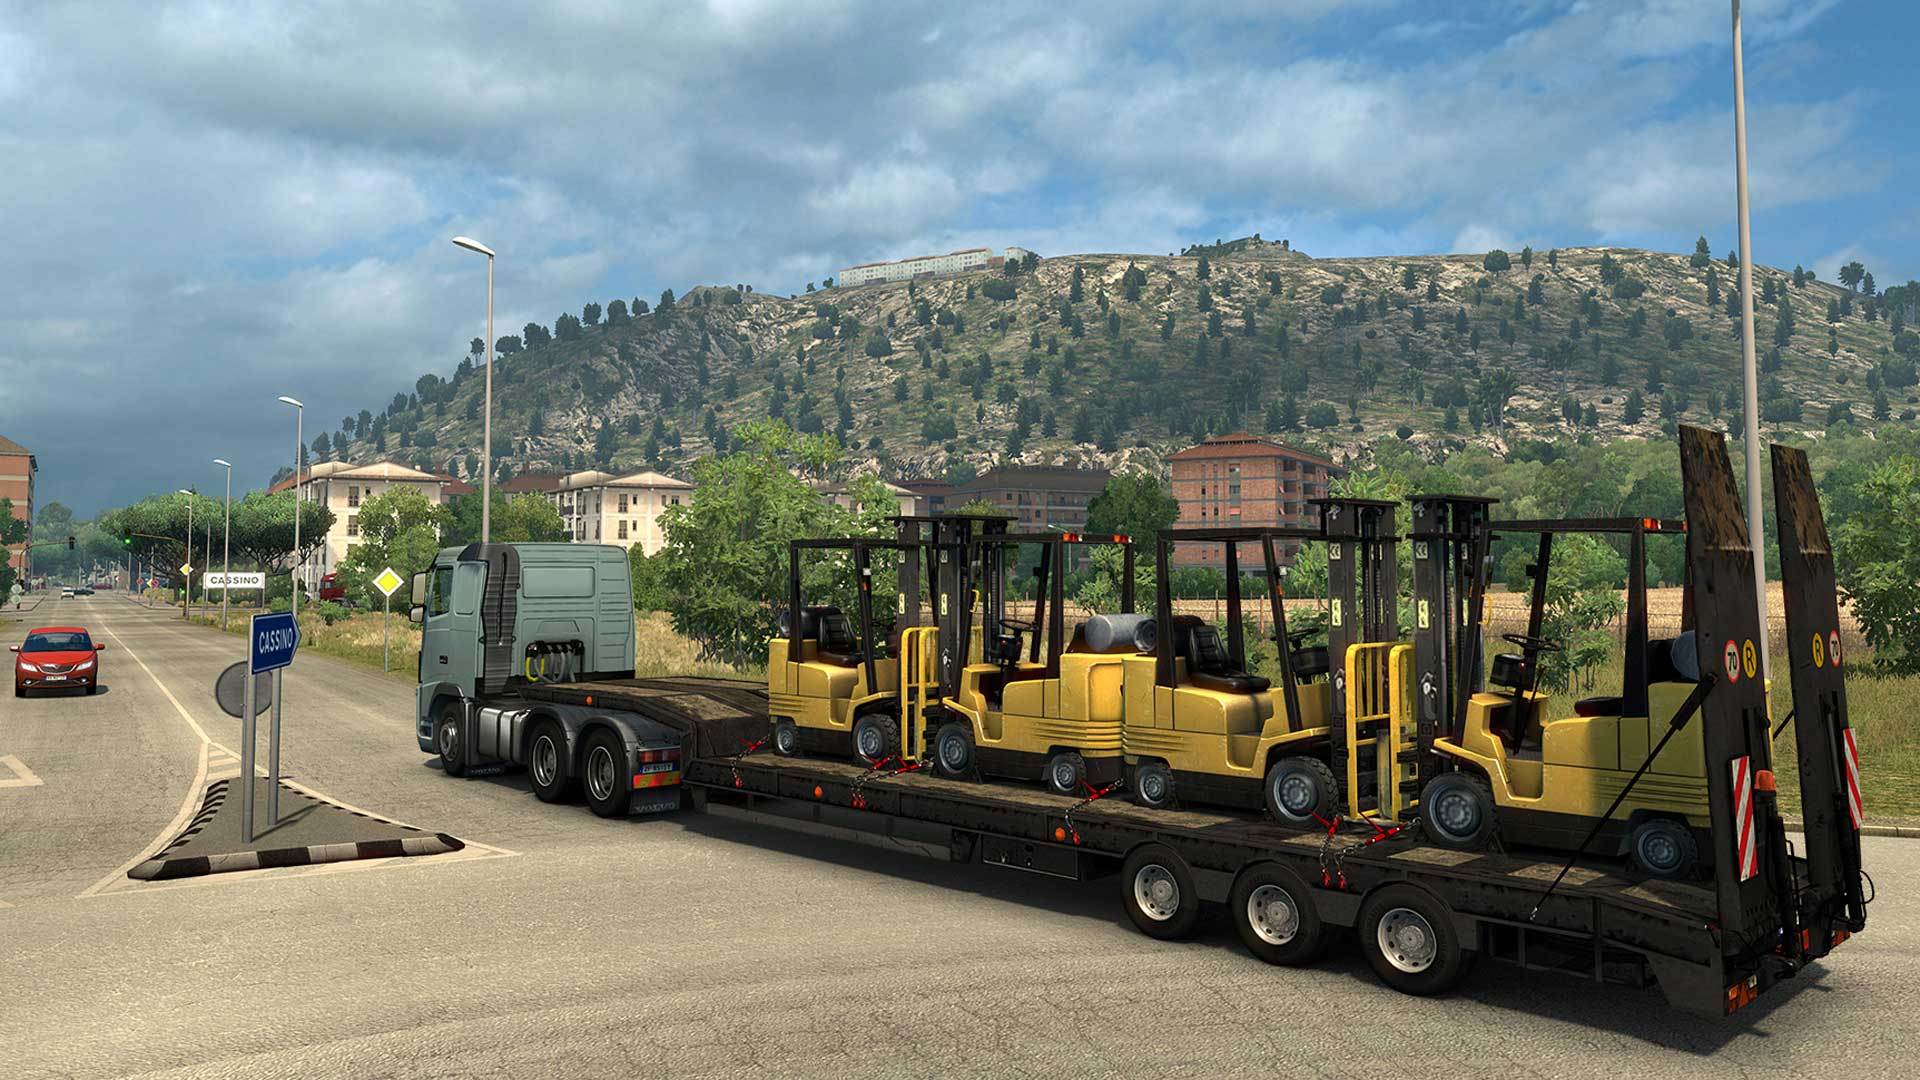 Buy Euro Truck Simulator 2: Italia Steam